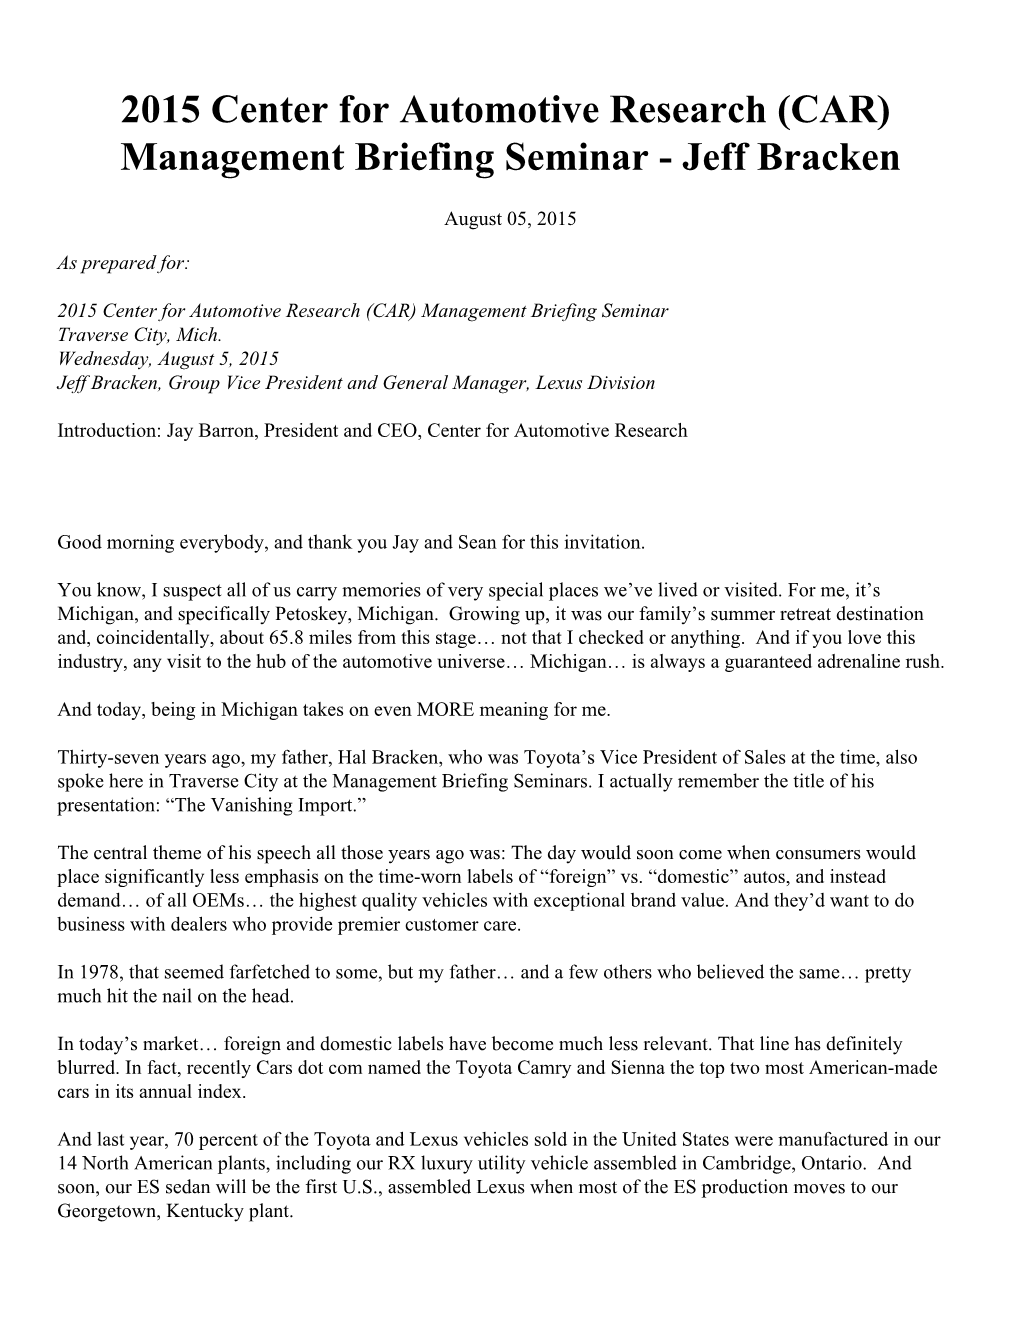 2015 Center for Automotive Research (CAR) Management Briefing Seminar - Jeff Bracken